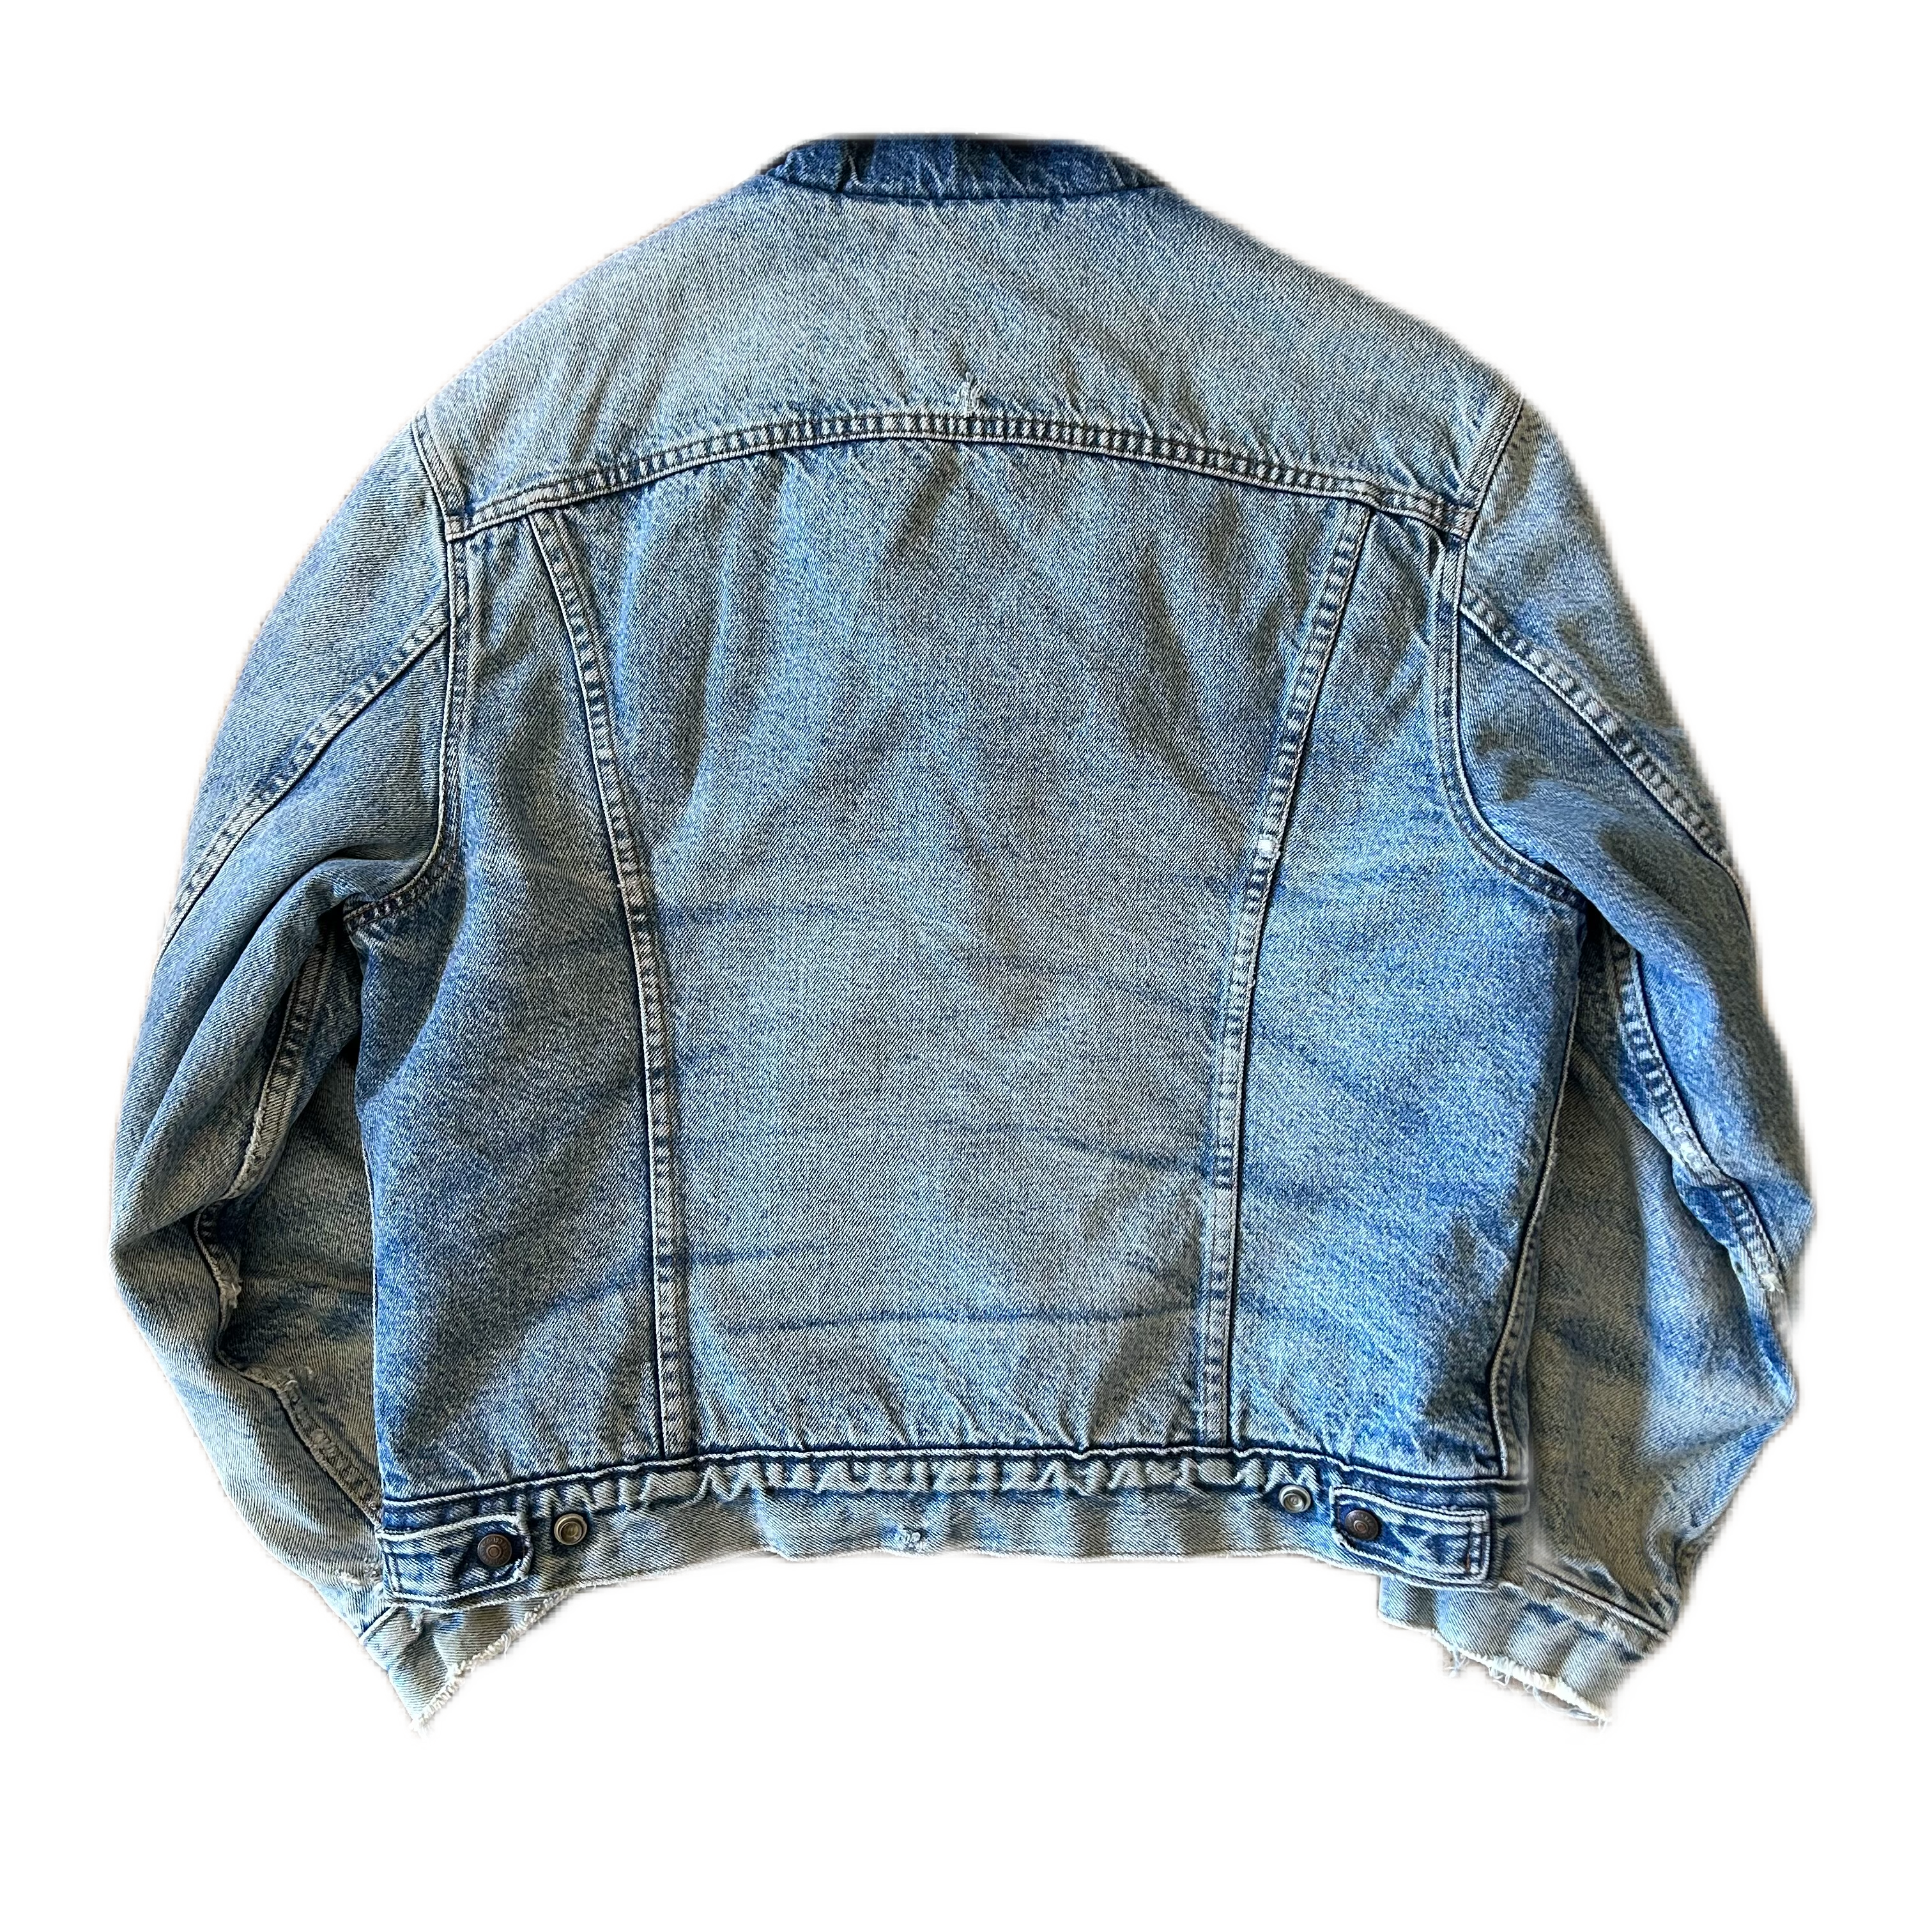 Vintage 1980s Levis Denim Jacket